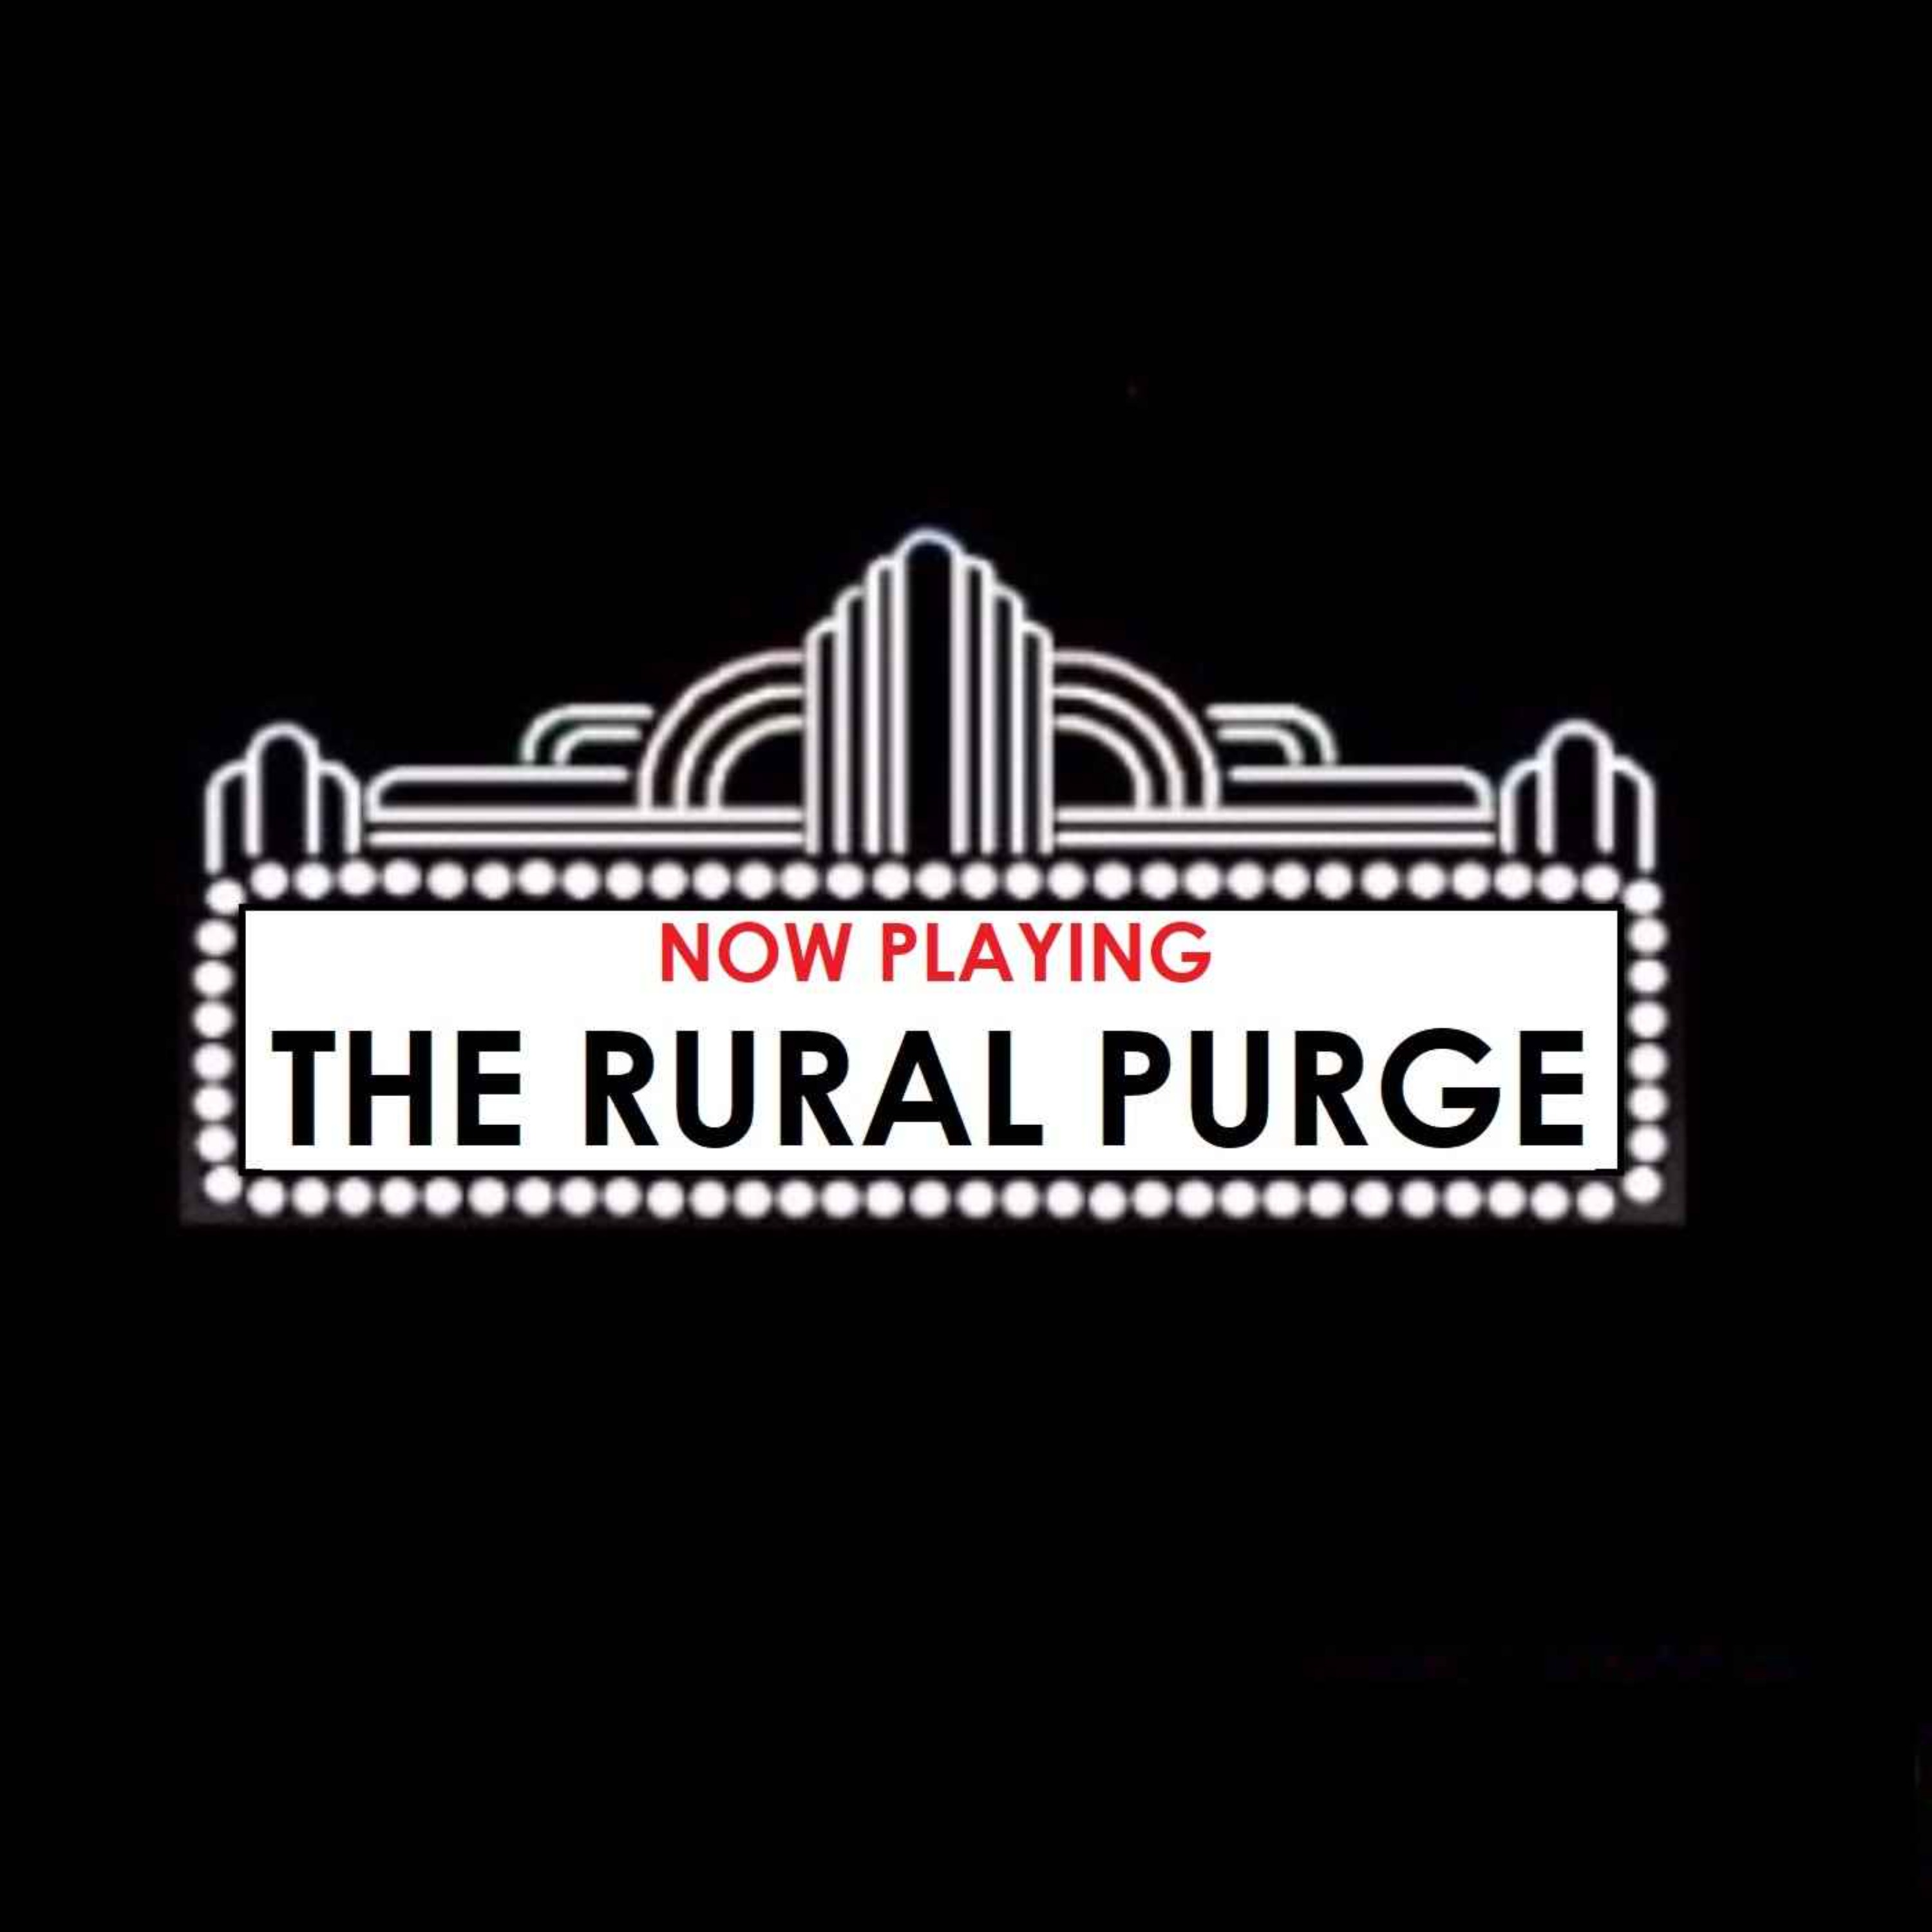 The Rural Purge